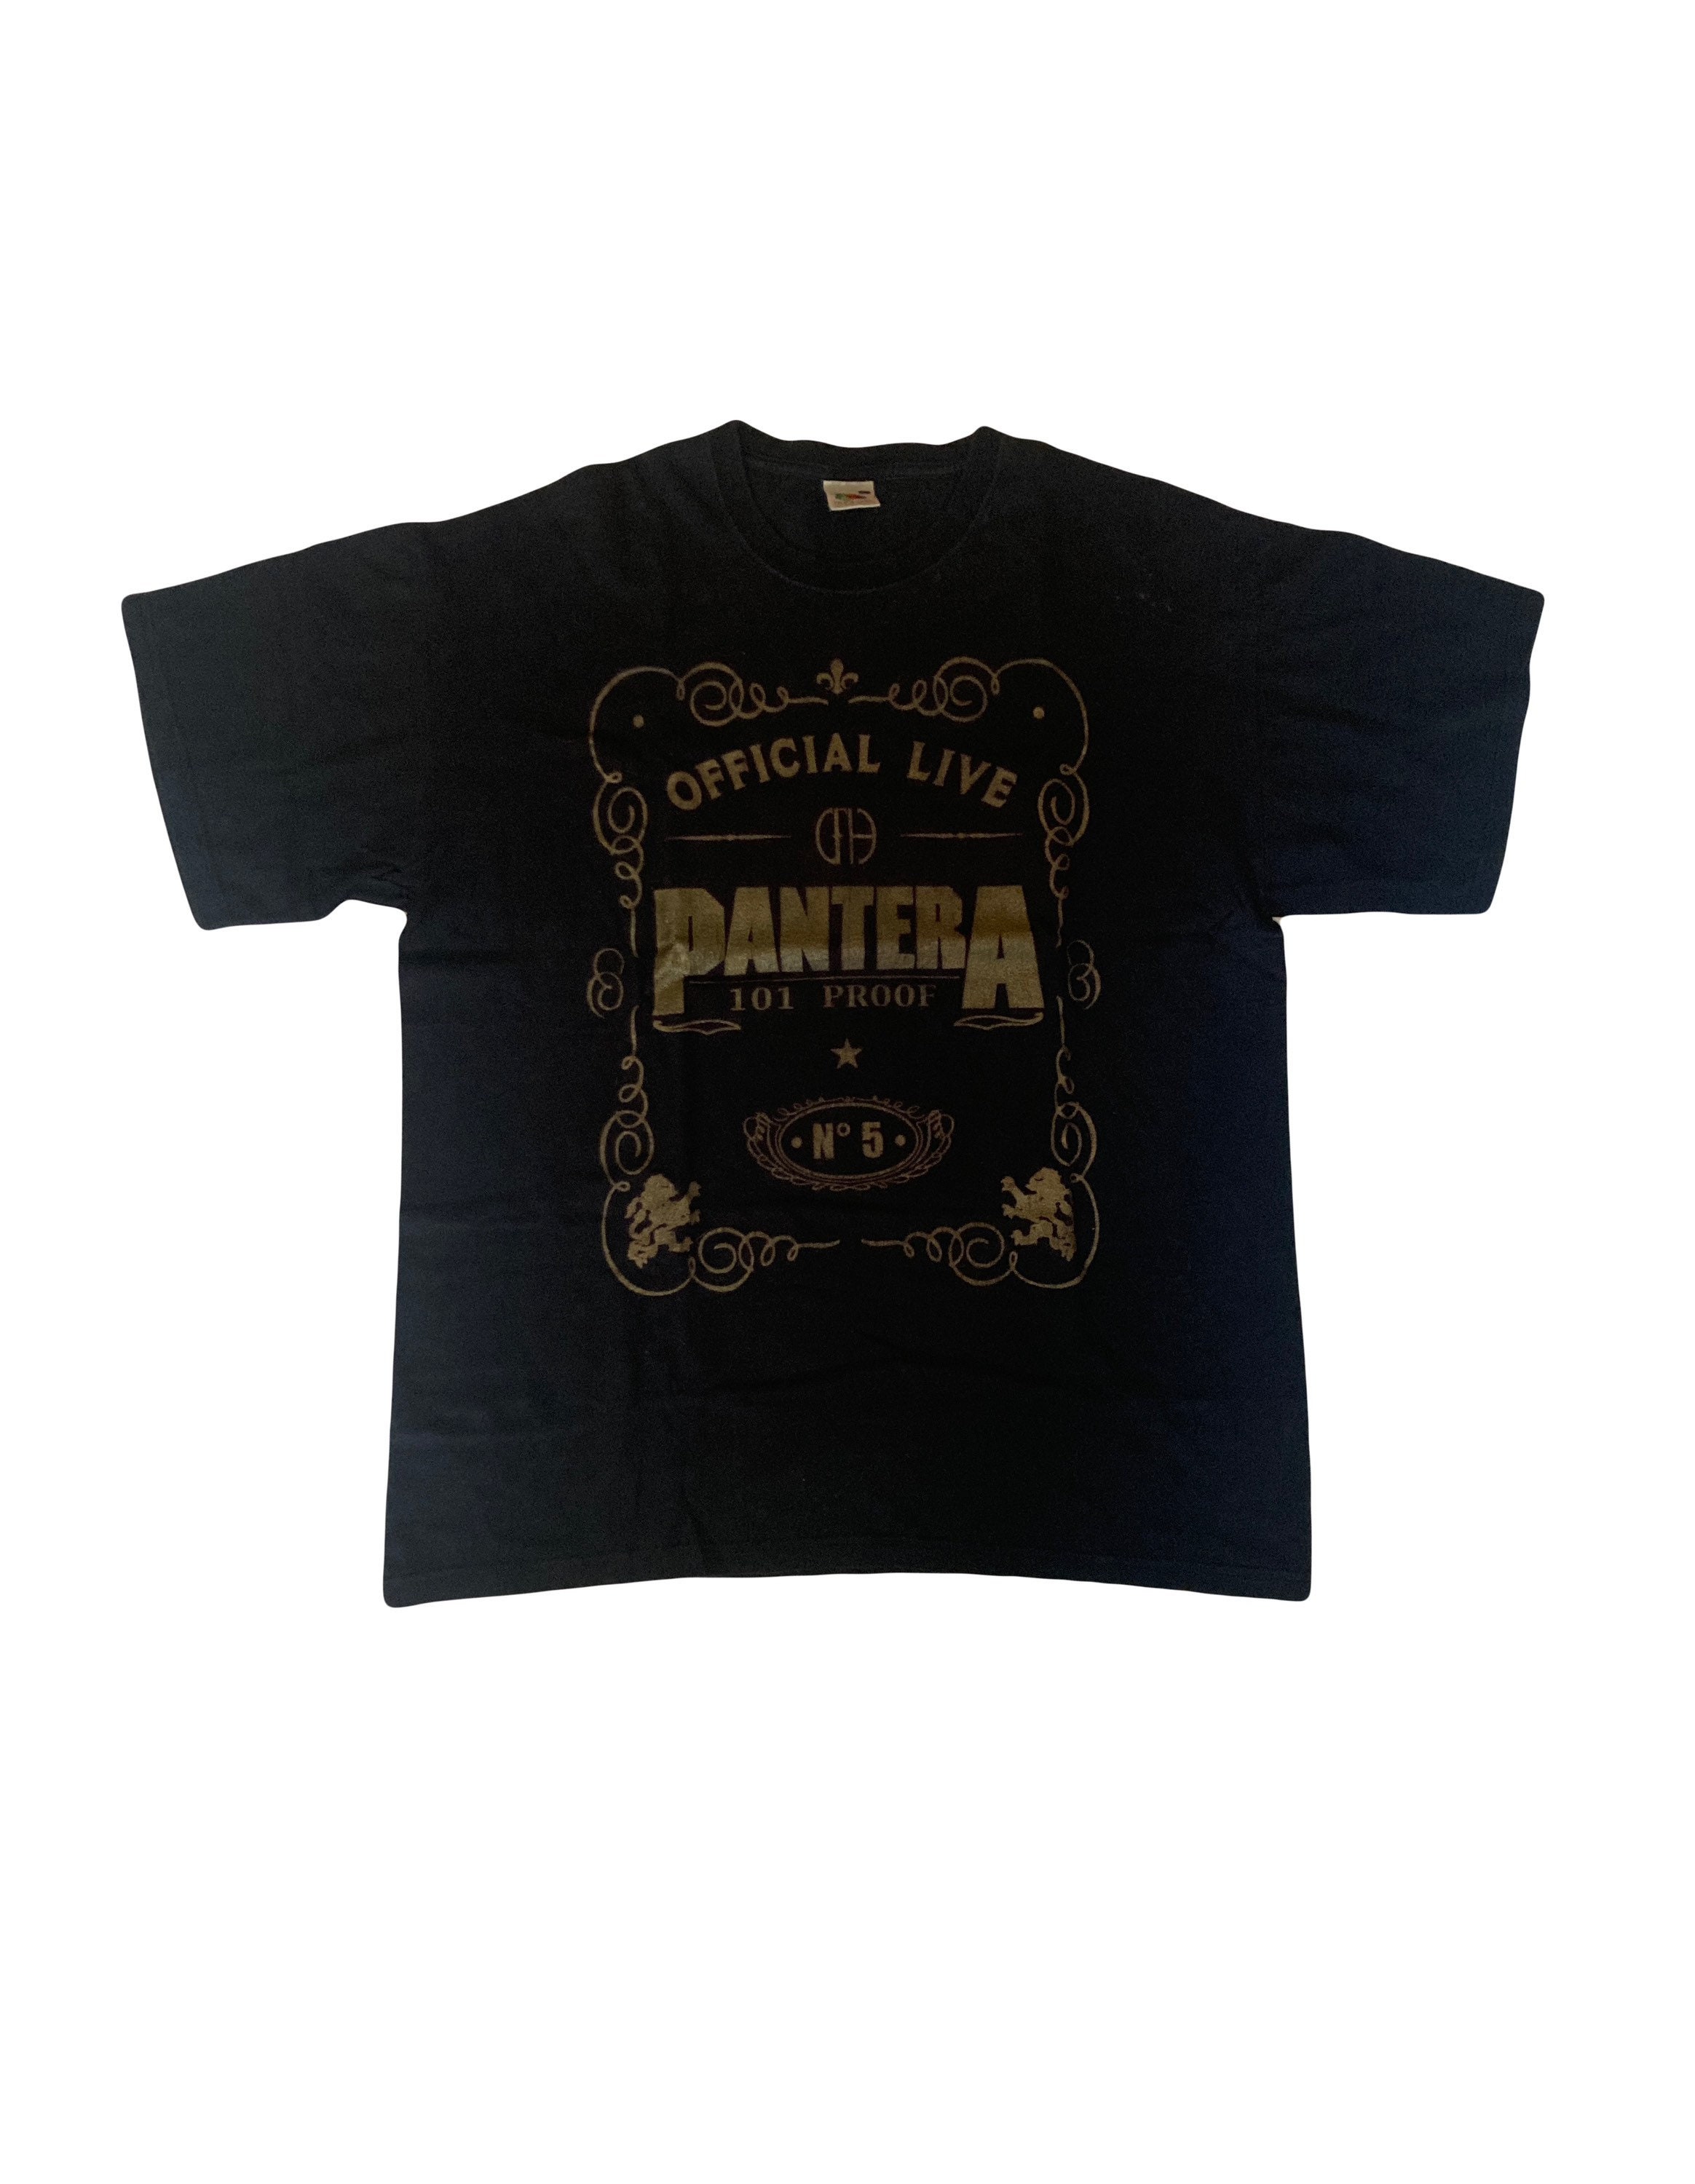 Vintage Band T Shirt Pantera 1997 Album Cover 101 Proof Size - Etsy